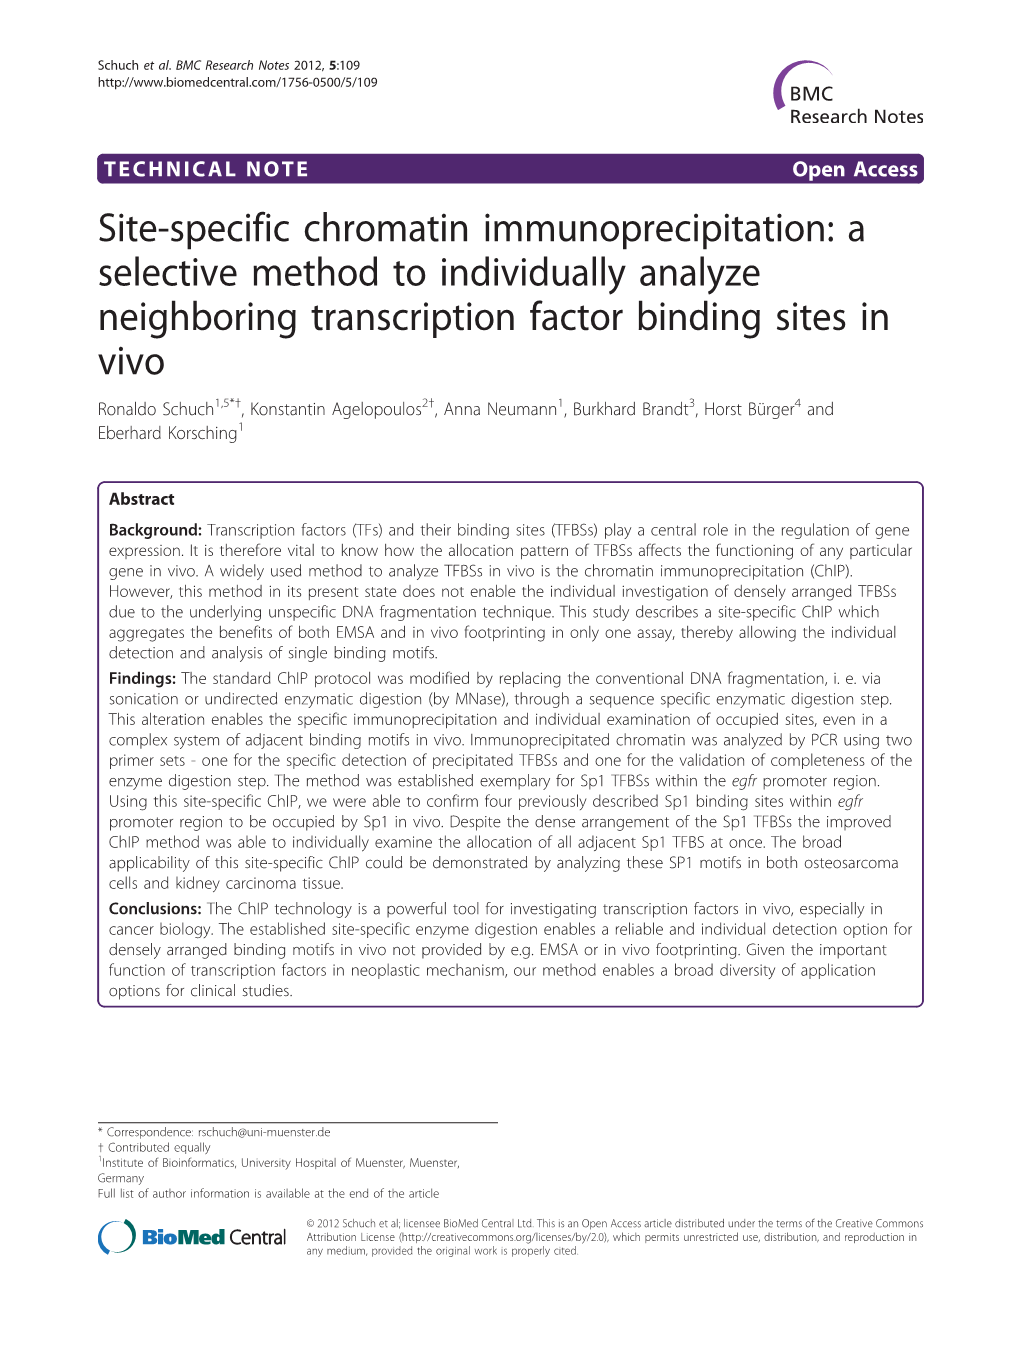 Site-Specific Chromatin Immunoprecipitation: a Selective Method to Individually Analyze Neighboring Transcription Factor Binding